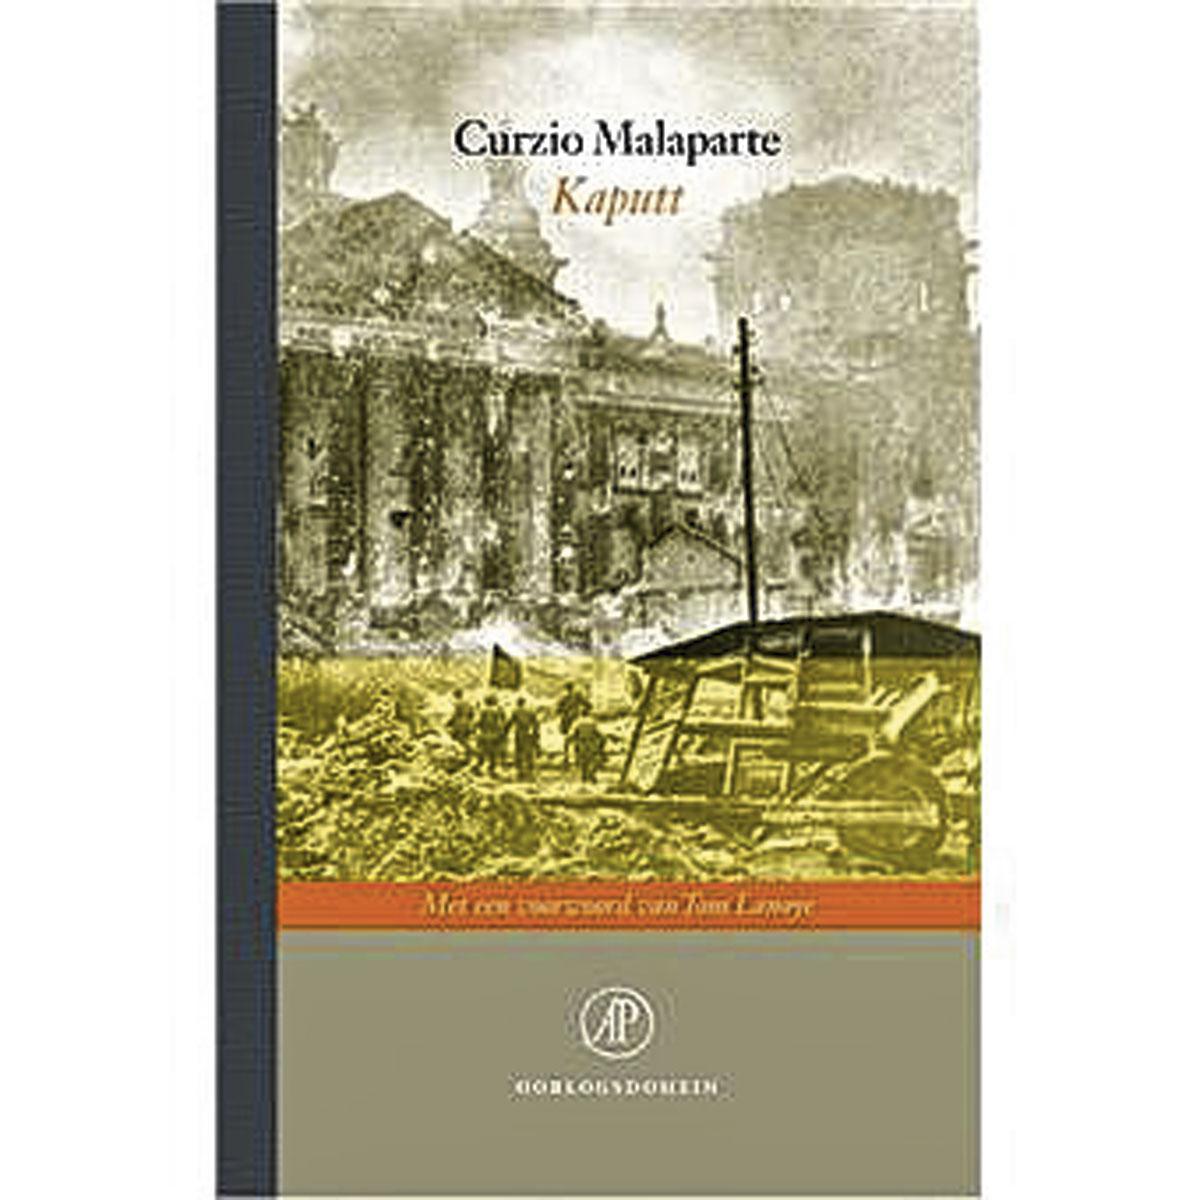 Curzio Malaparte, Kaputt, De Arbeiderspers, 611 blz., 29,99 euro.